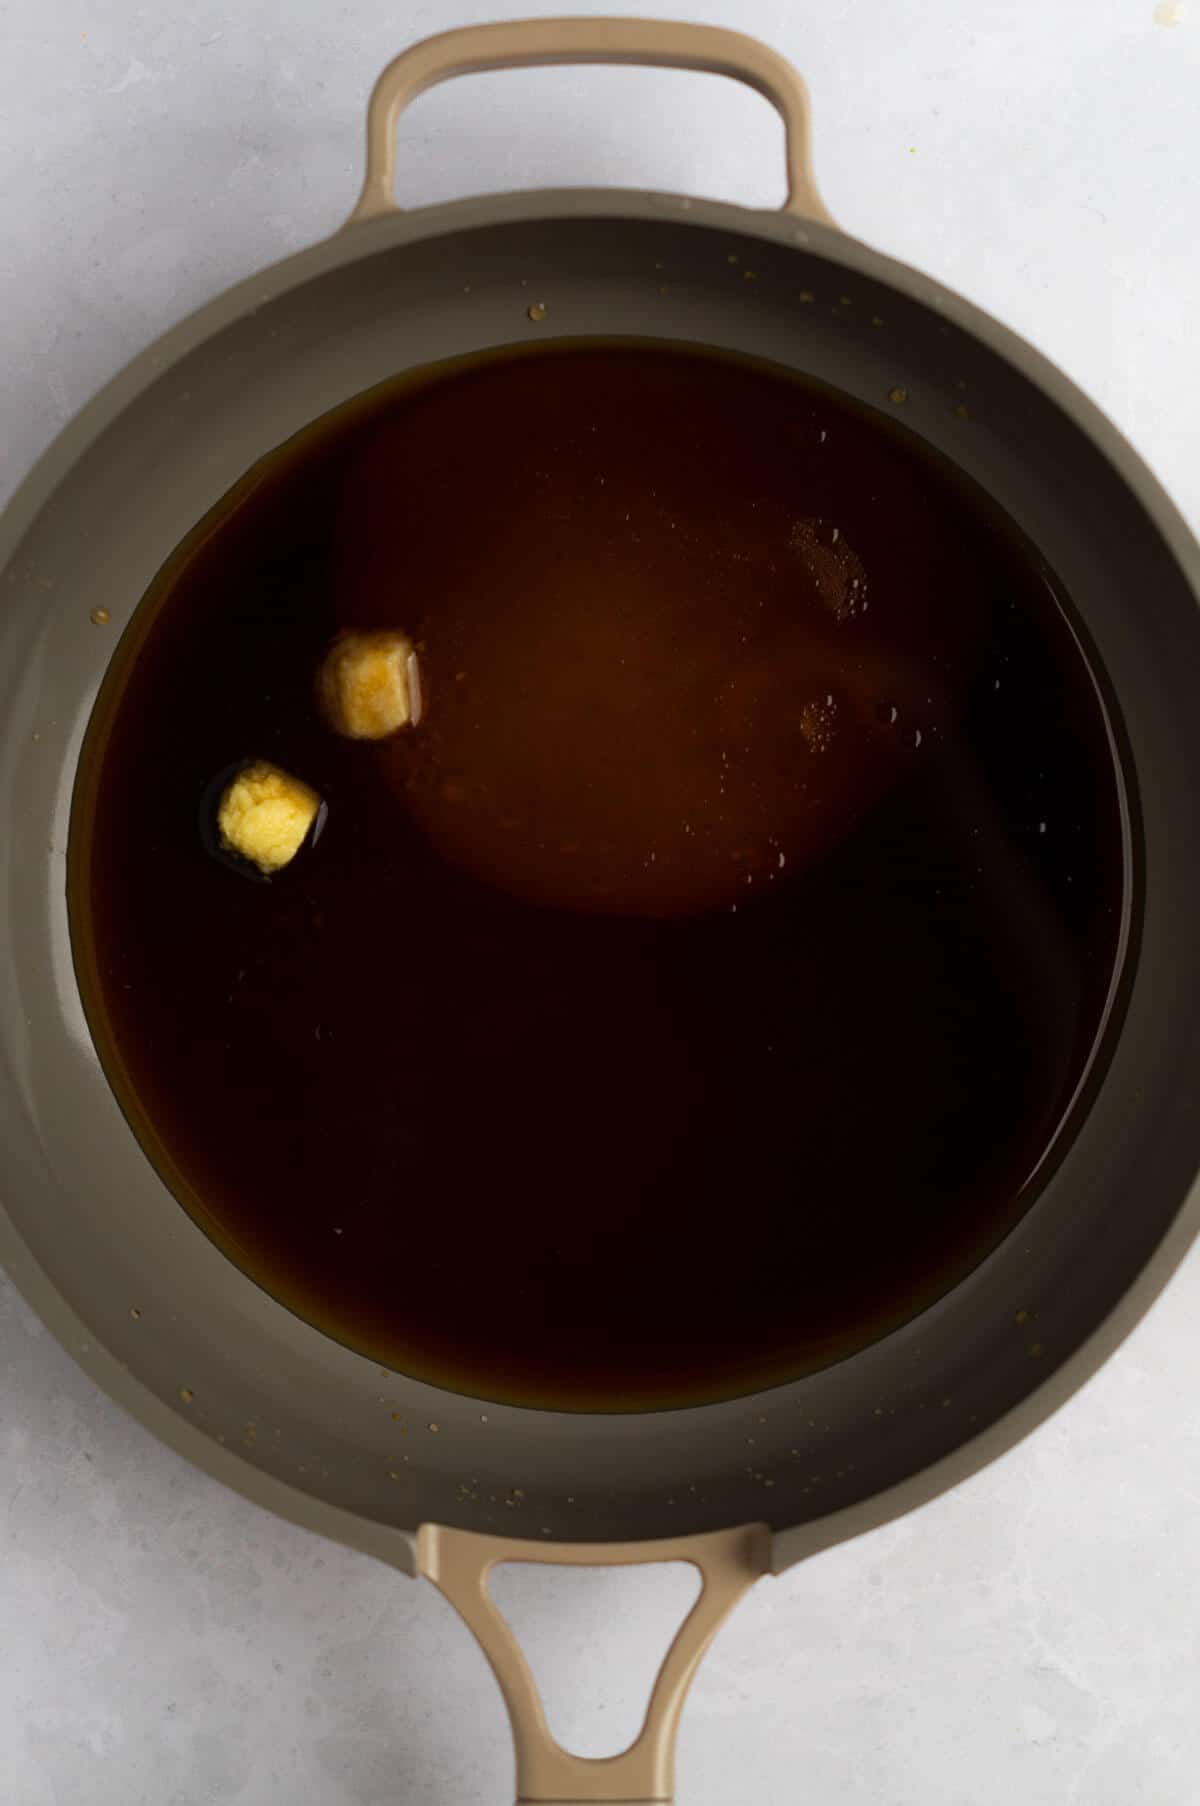 An overhead shot of a saucepan of homemade teriyaki sauce.